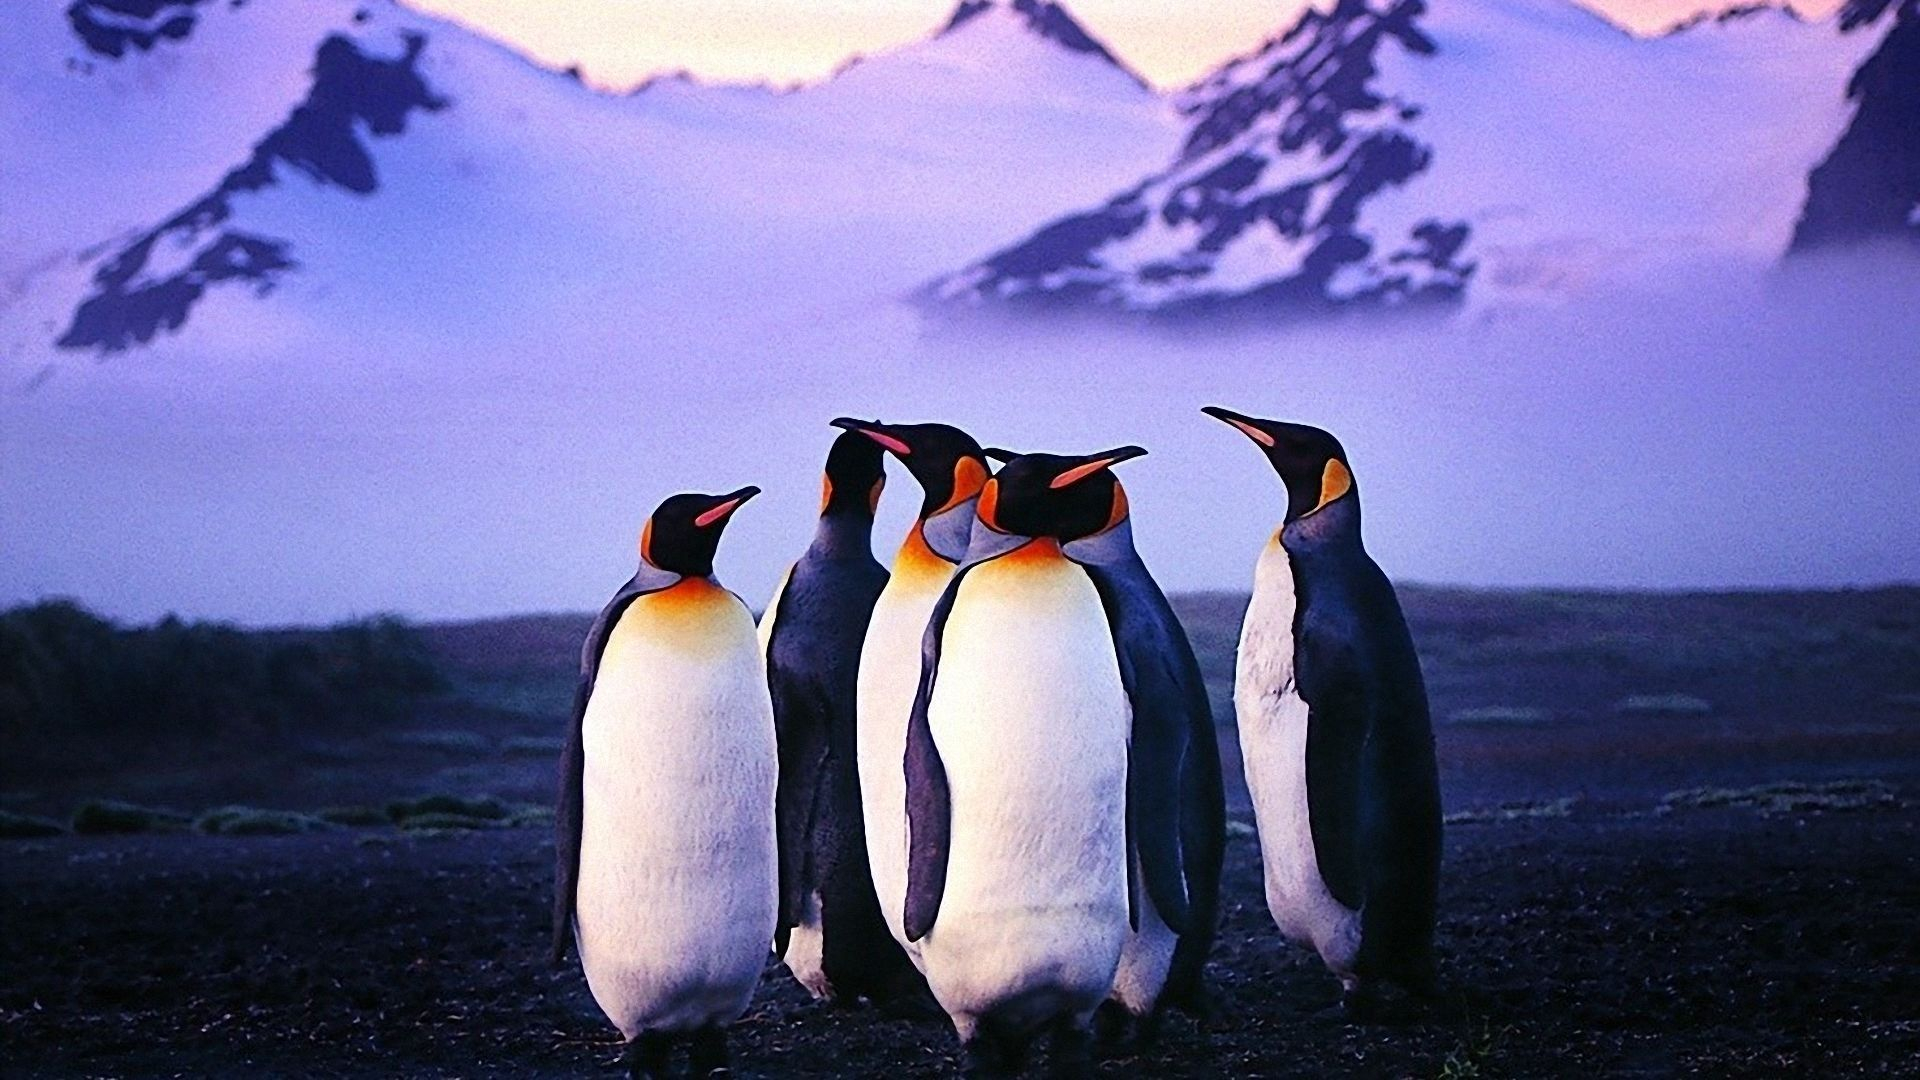 1920x1080 penguin pictures free for desktop | Penguin wallpaper, Penguins, Penguin images